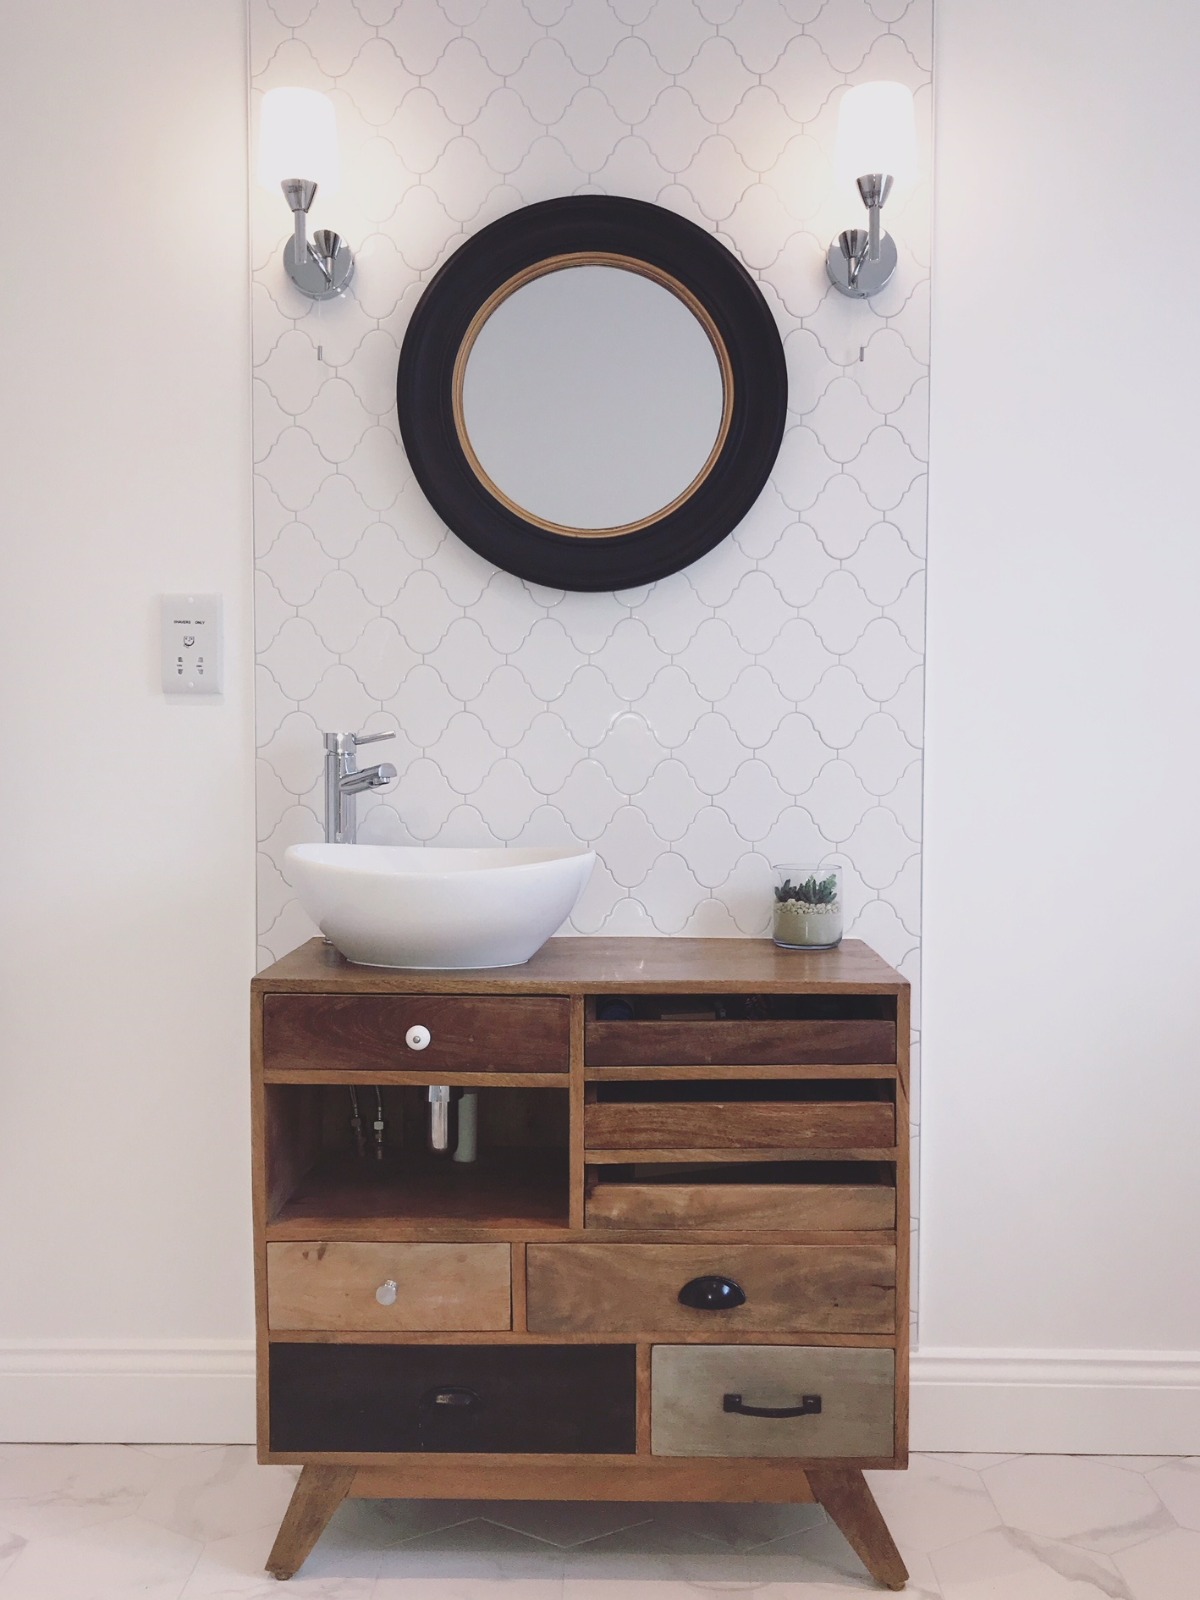 Bathroom Mirror Ideas - Pikalily Blog